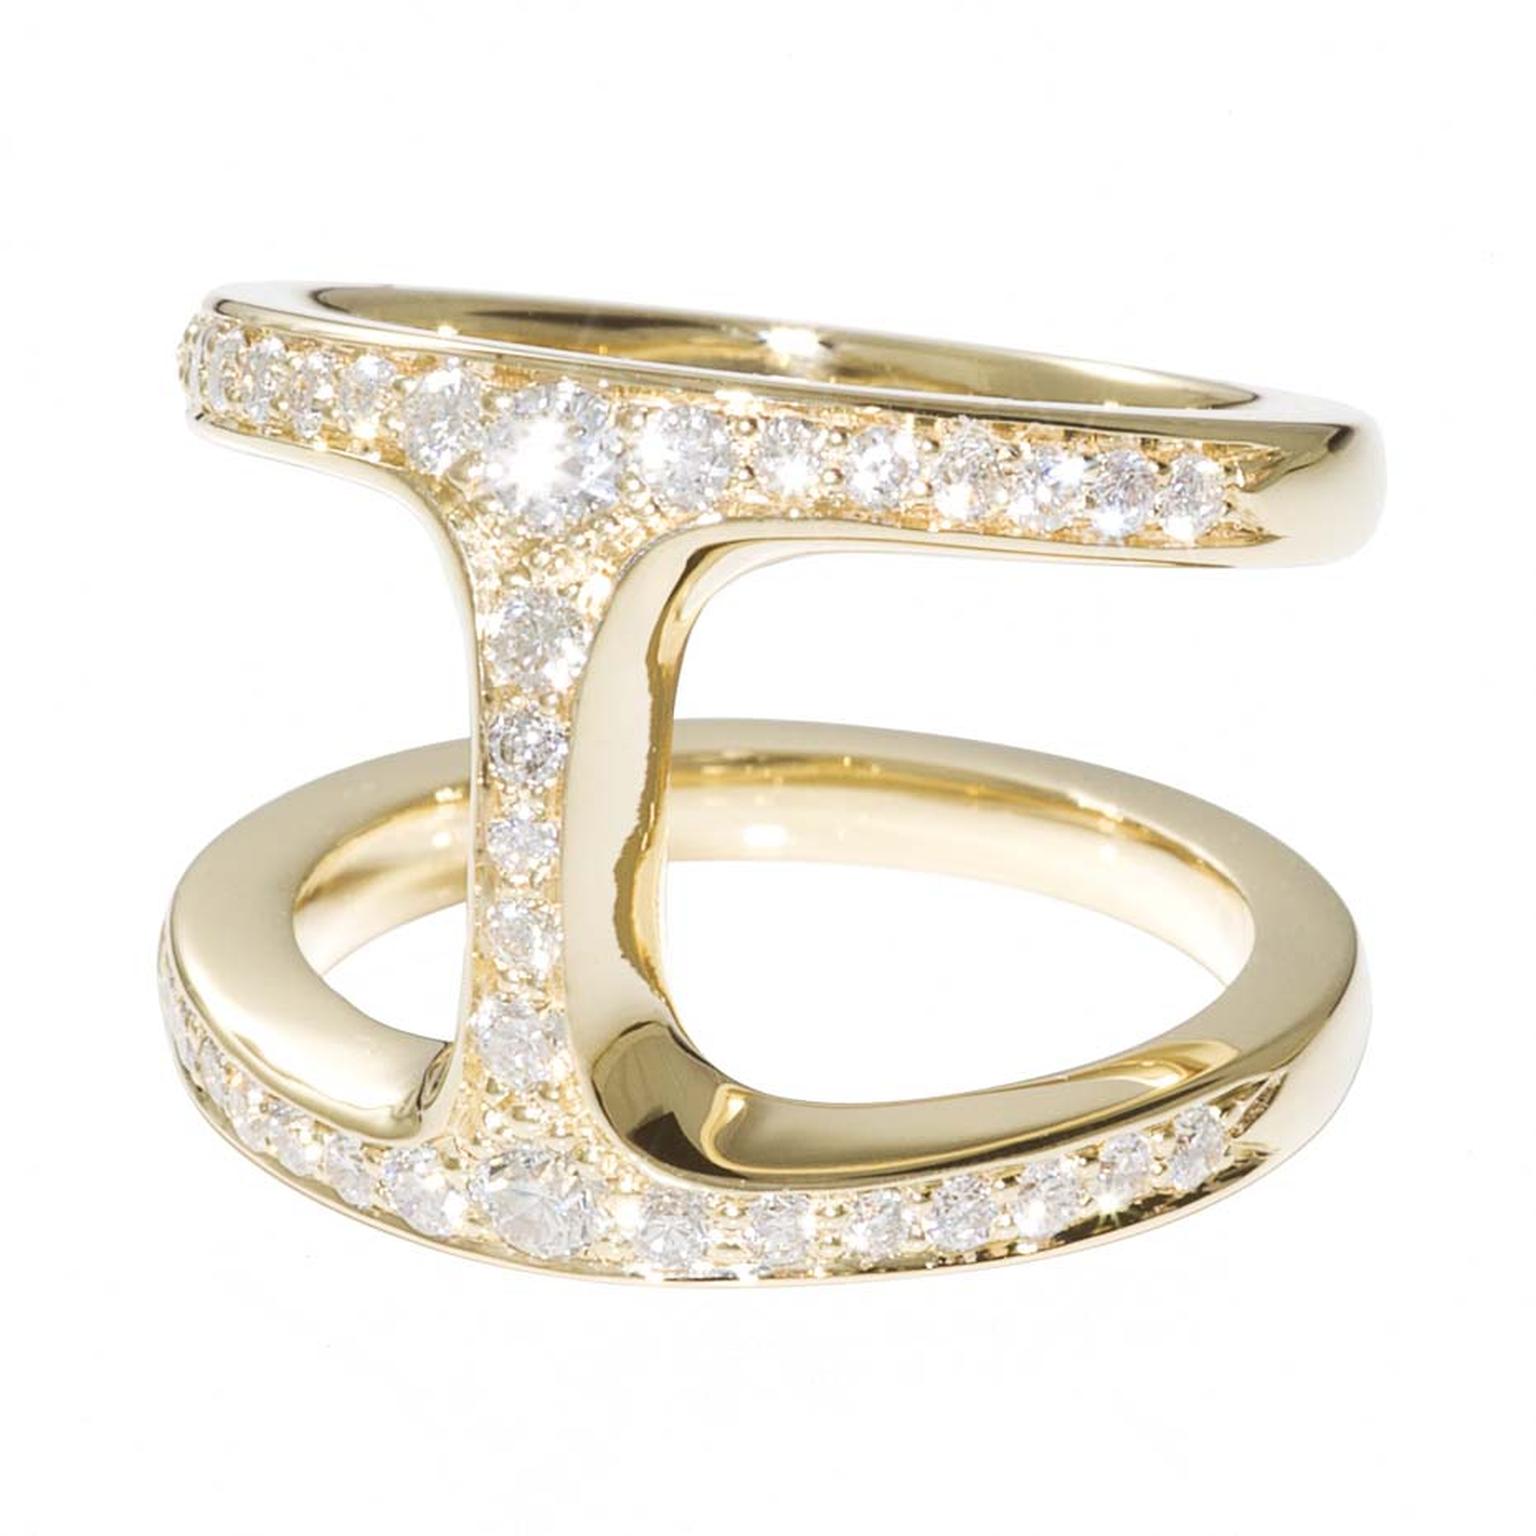 Hoorsenbuhs Dame Phantom ring in yellow gold set with white diamonds.